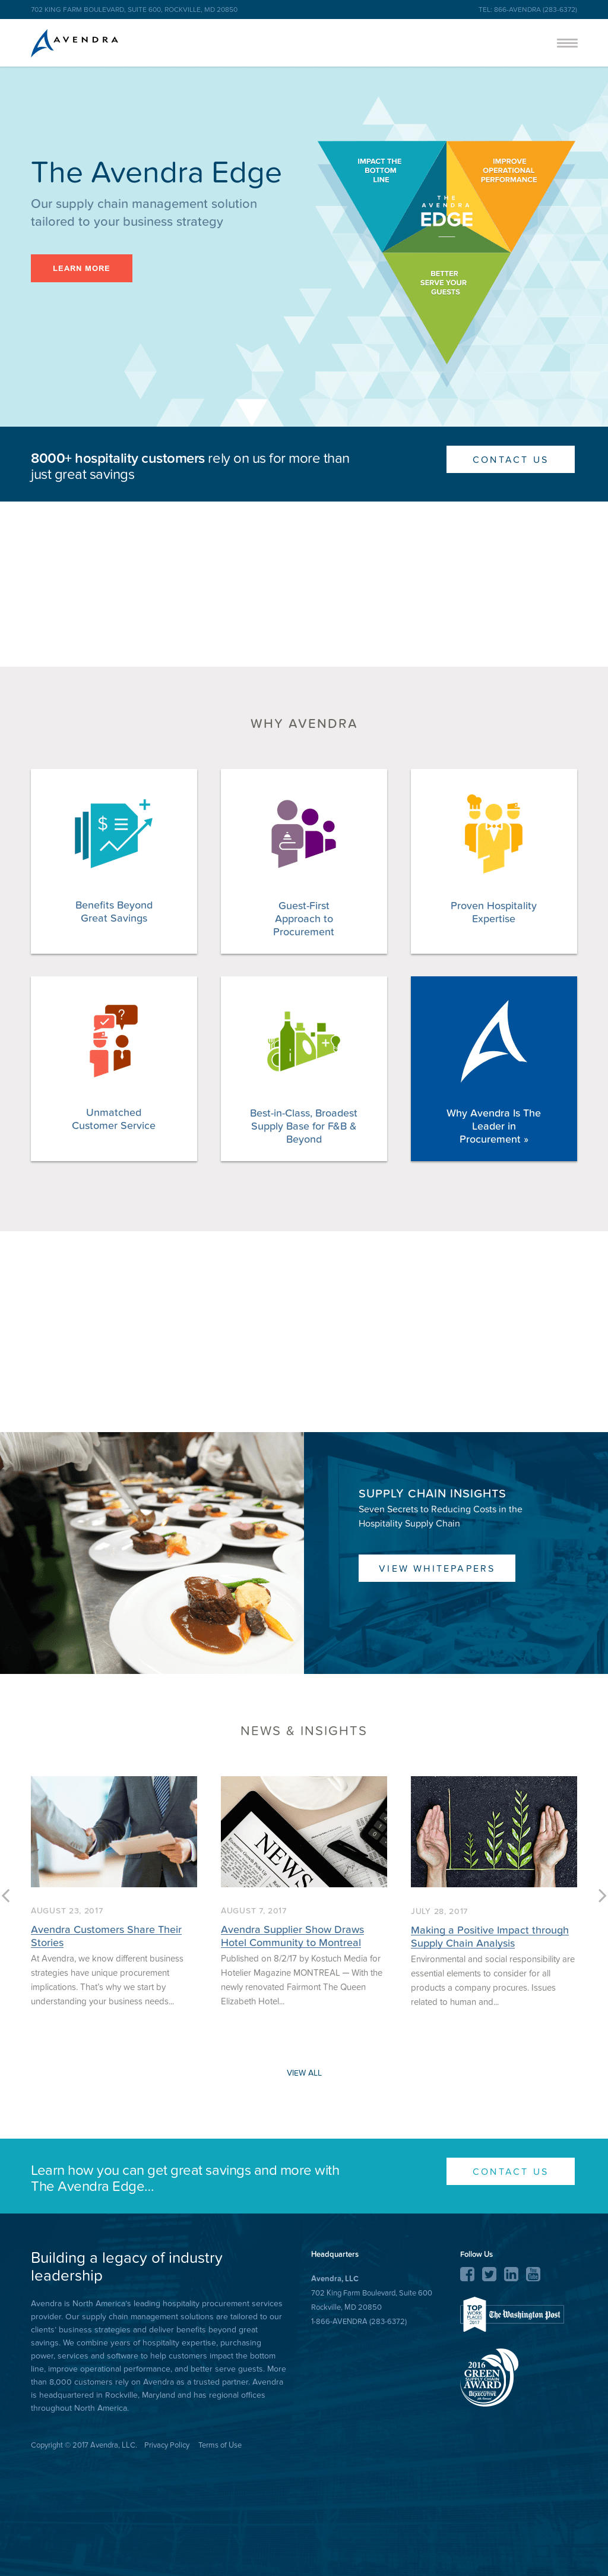 Avendra Logo - Avendra Competitors, Revenue and Employees Company Profile